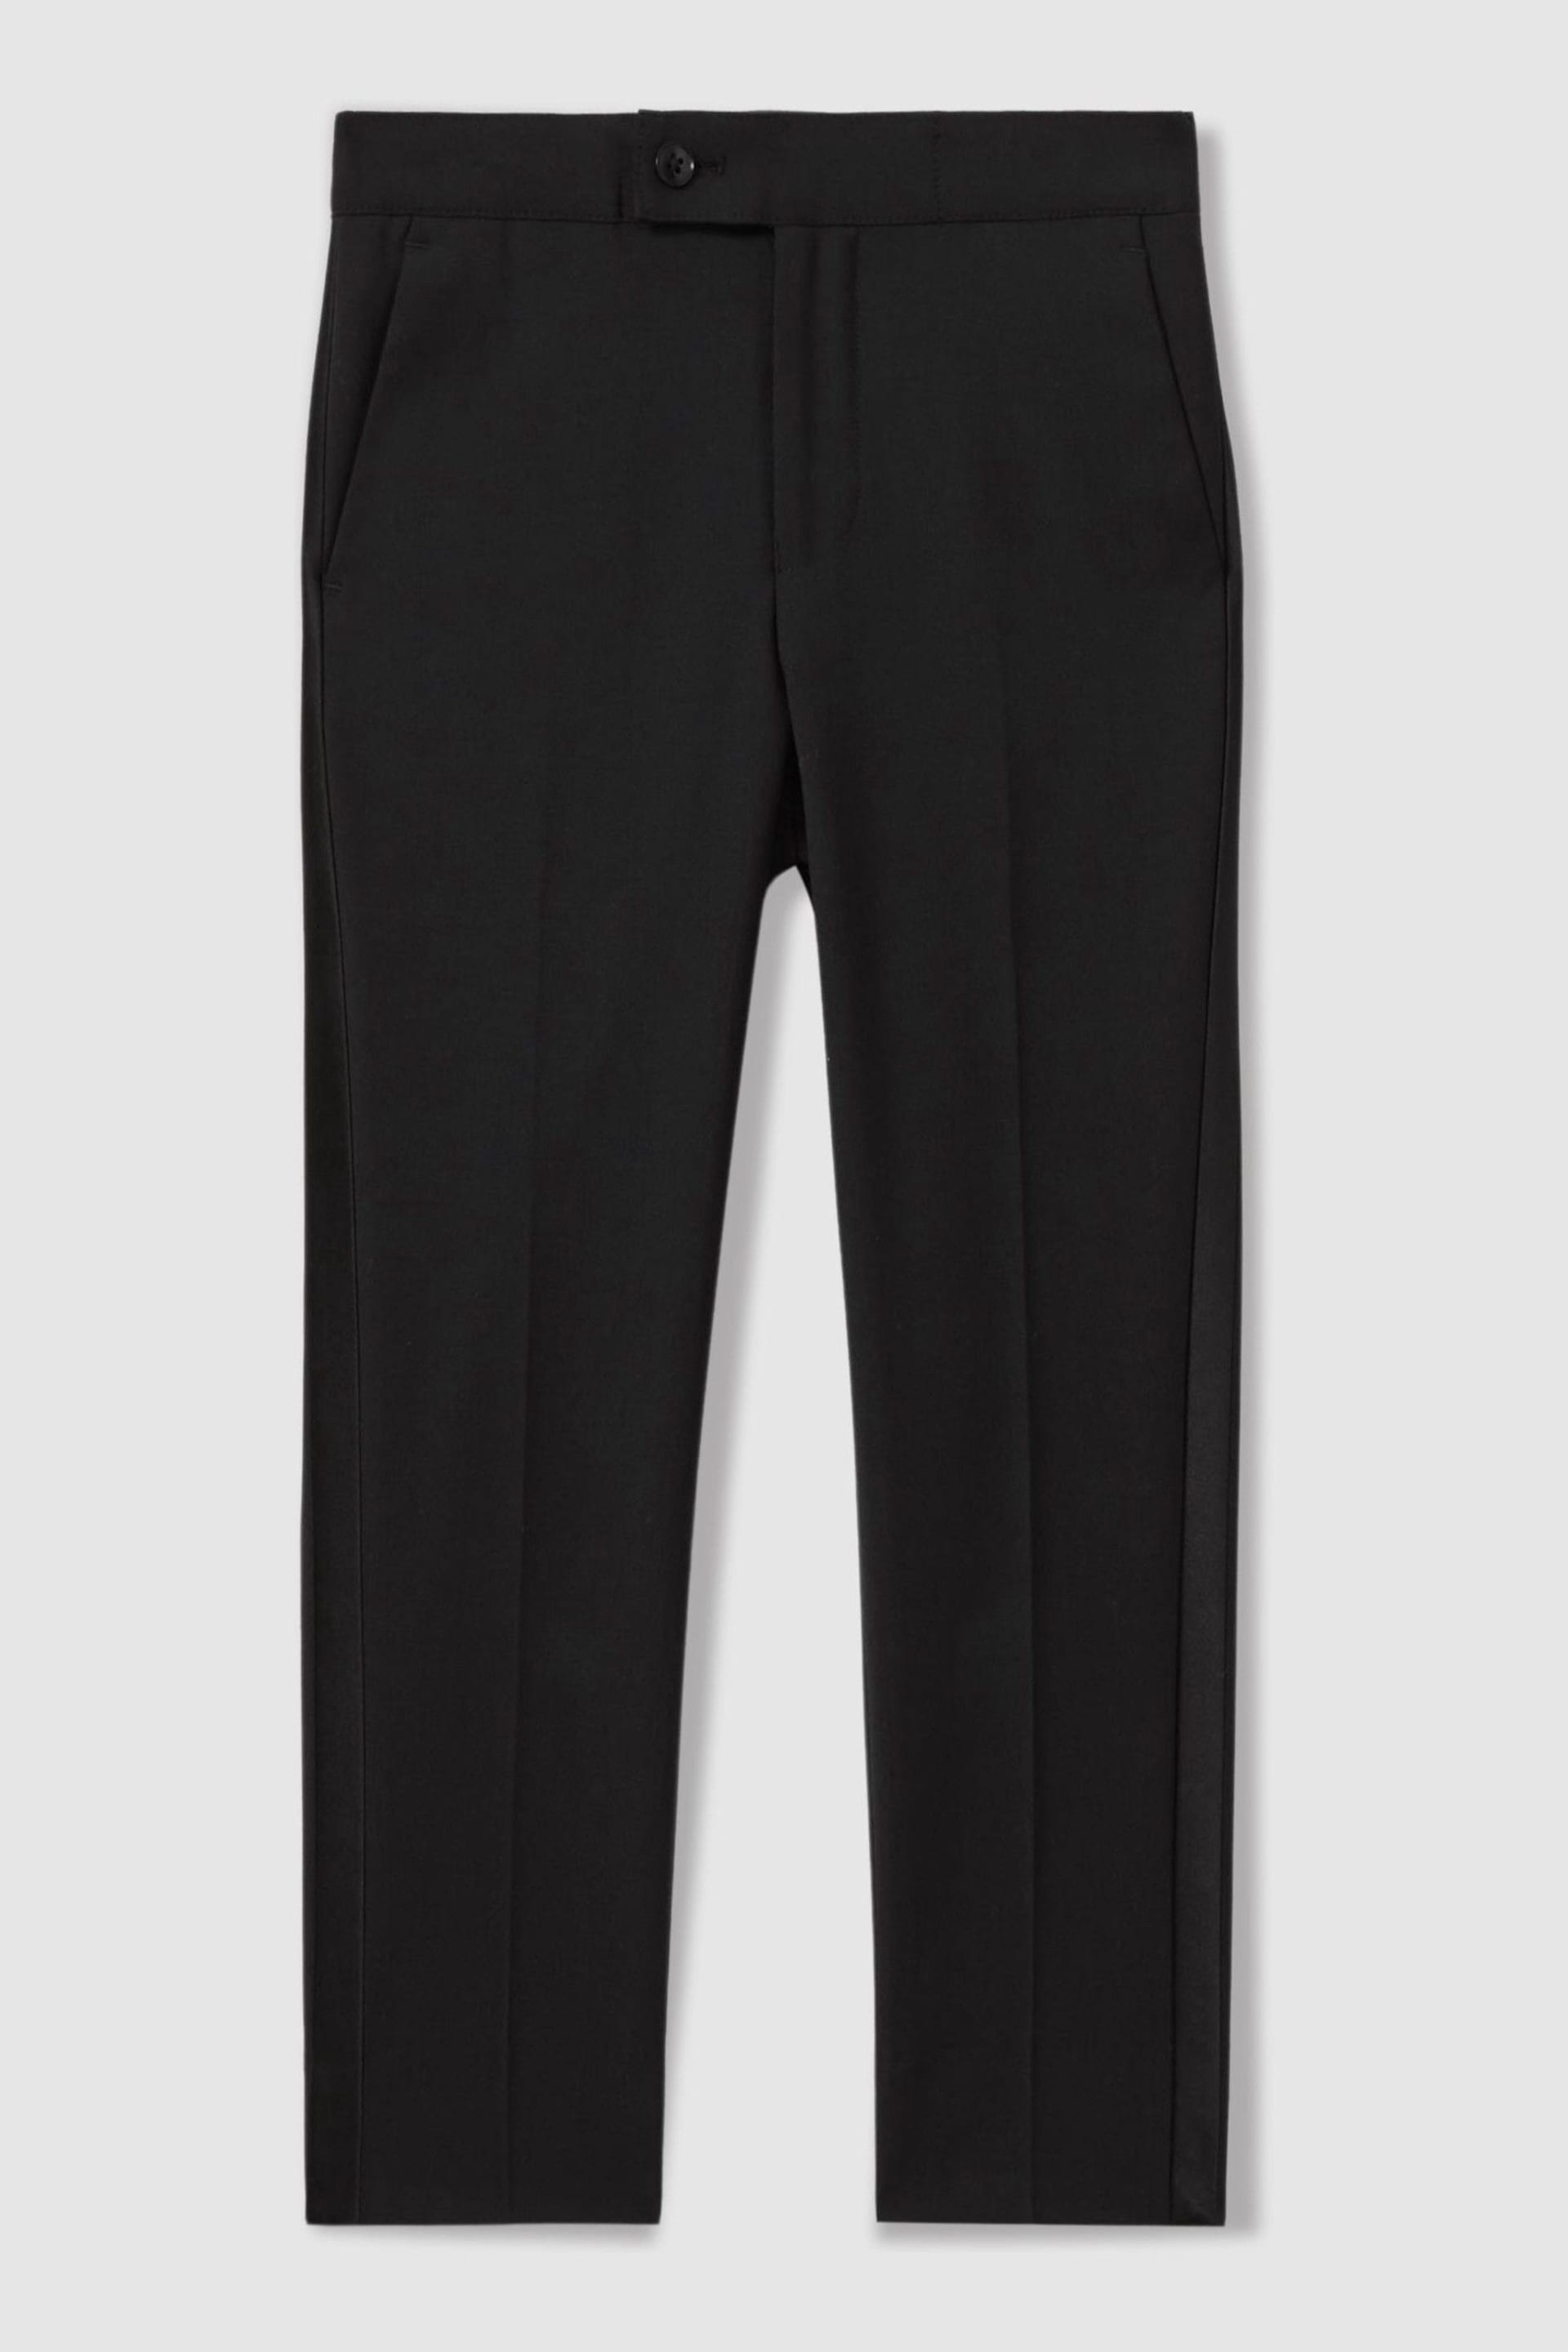 Reiss Black Knightsbridge T Tuxedo Satin Stripe Trousers - Image 2 of 4